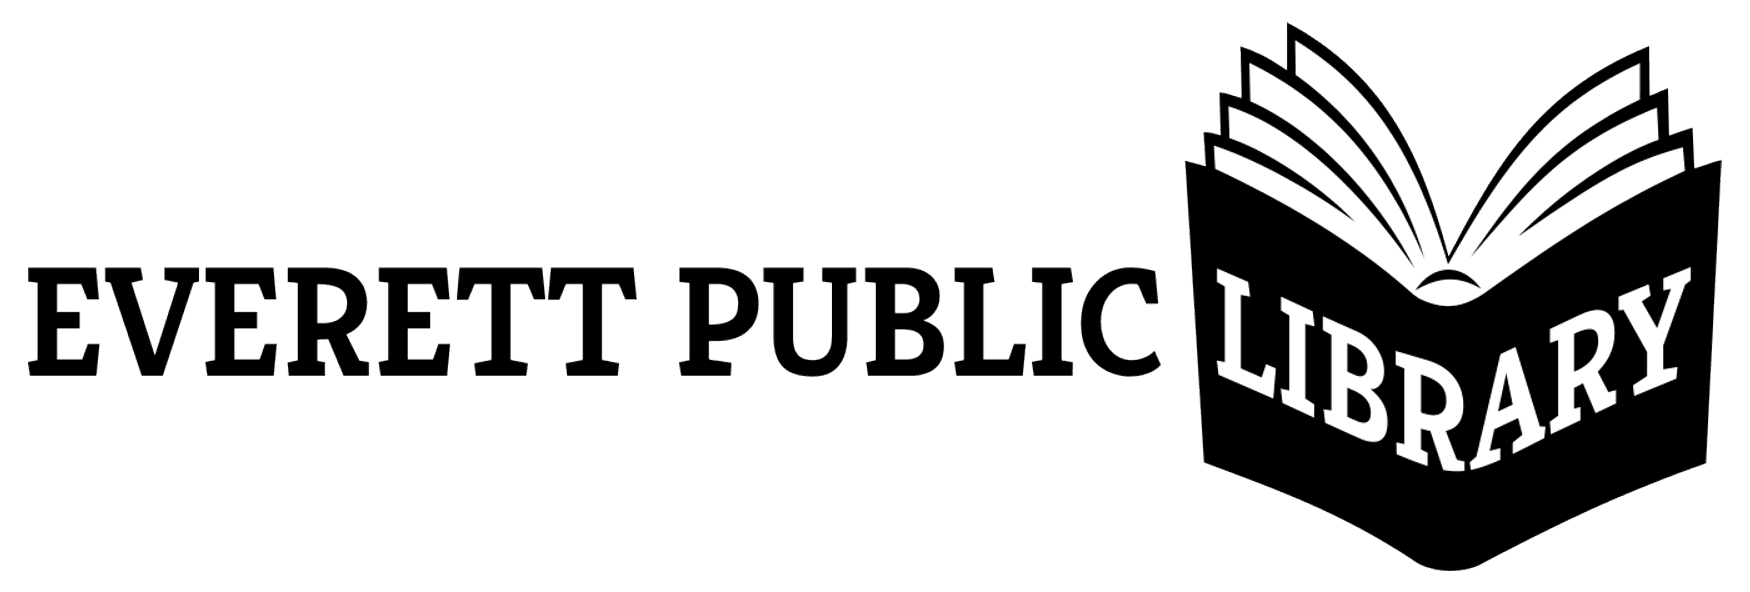 Everett Logo - Everett Library, WA | Official Website